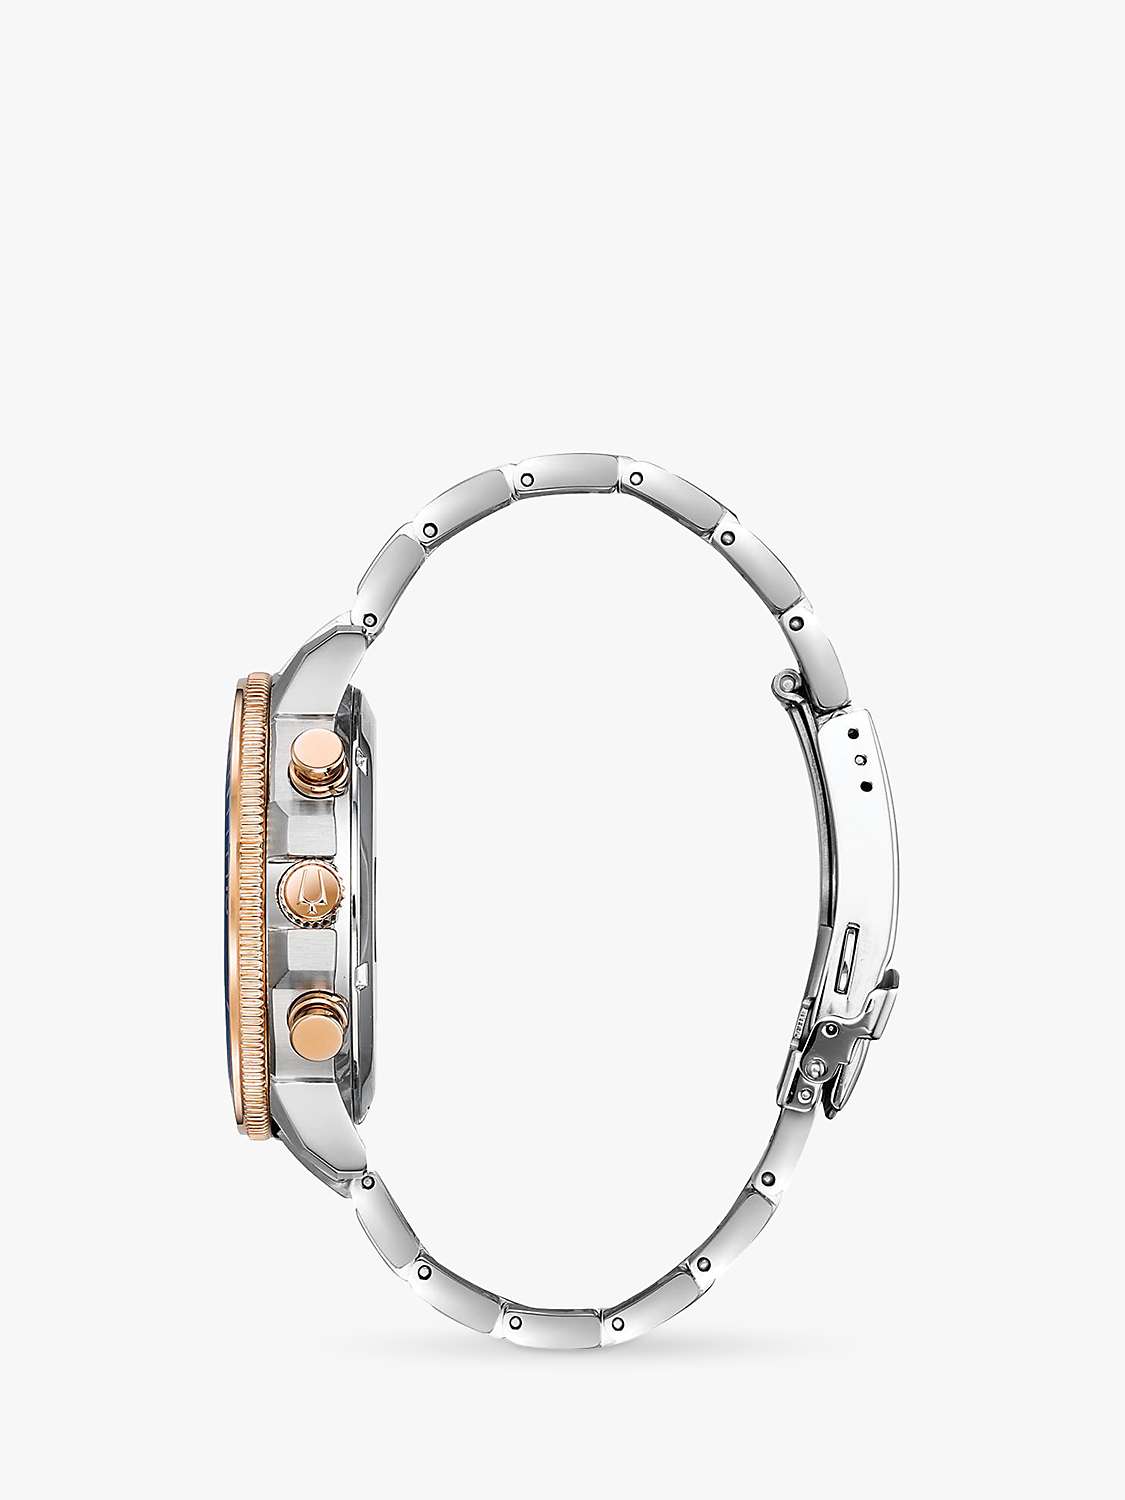 Buy Bulova 98B301 Men's Marine Star Chronograph Bracelet Strap Watch, Silver/Blue Online at johnlewis.com